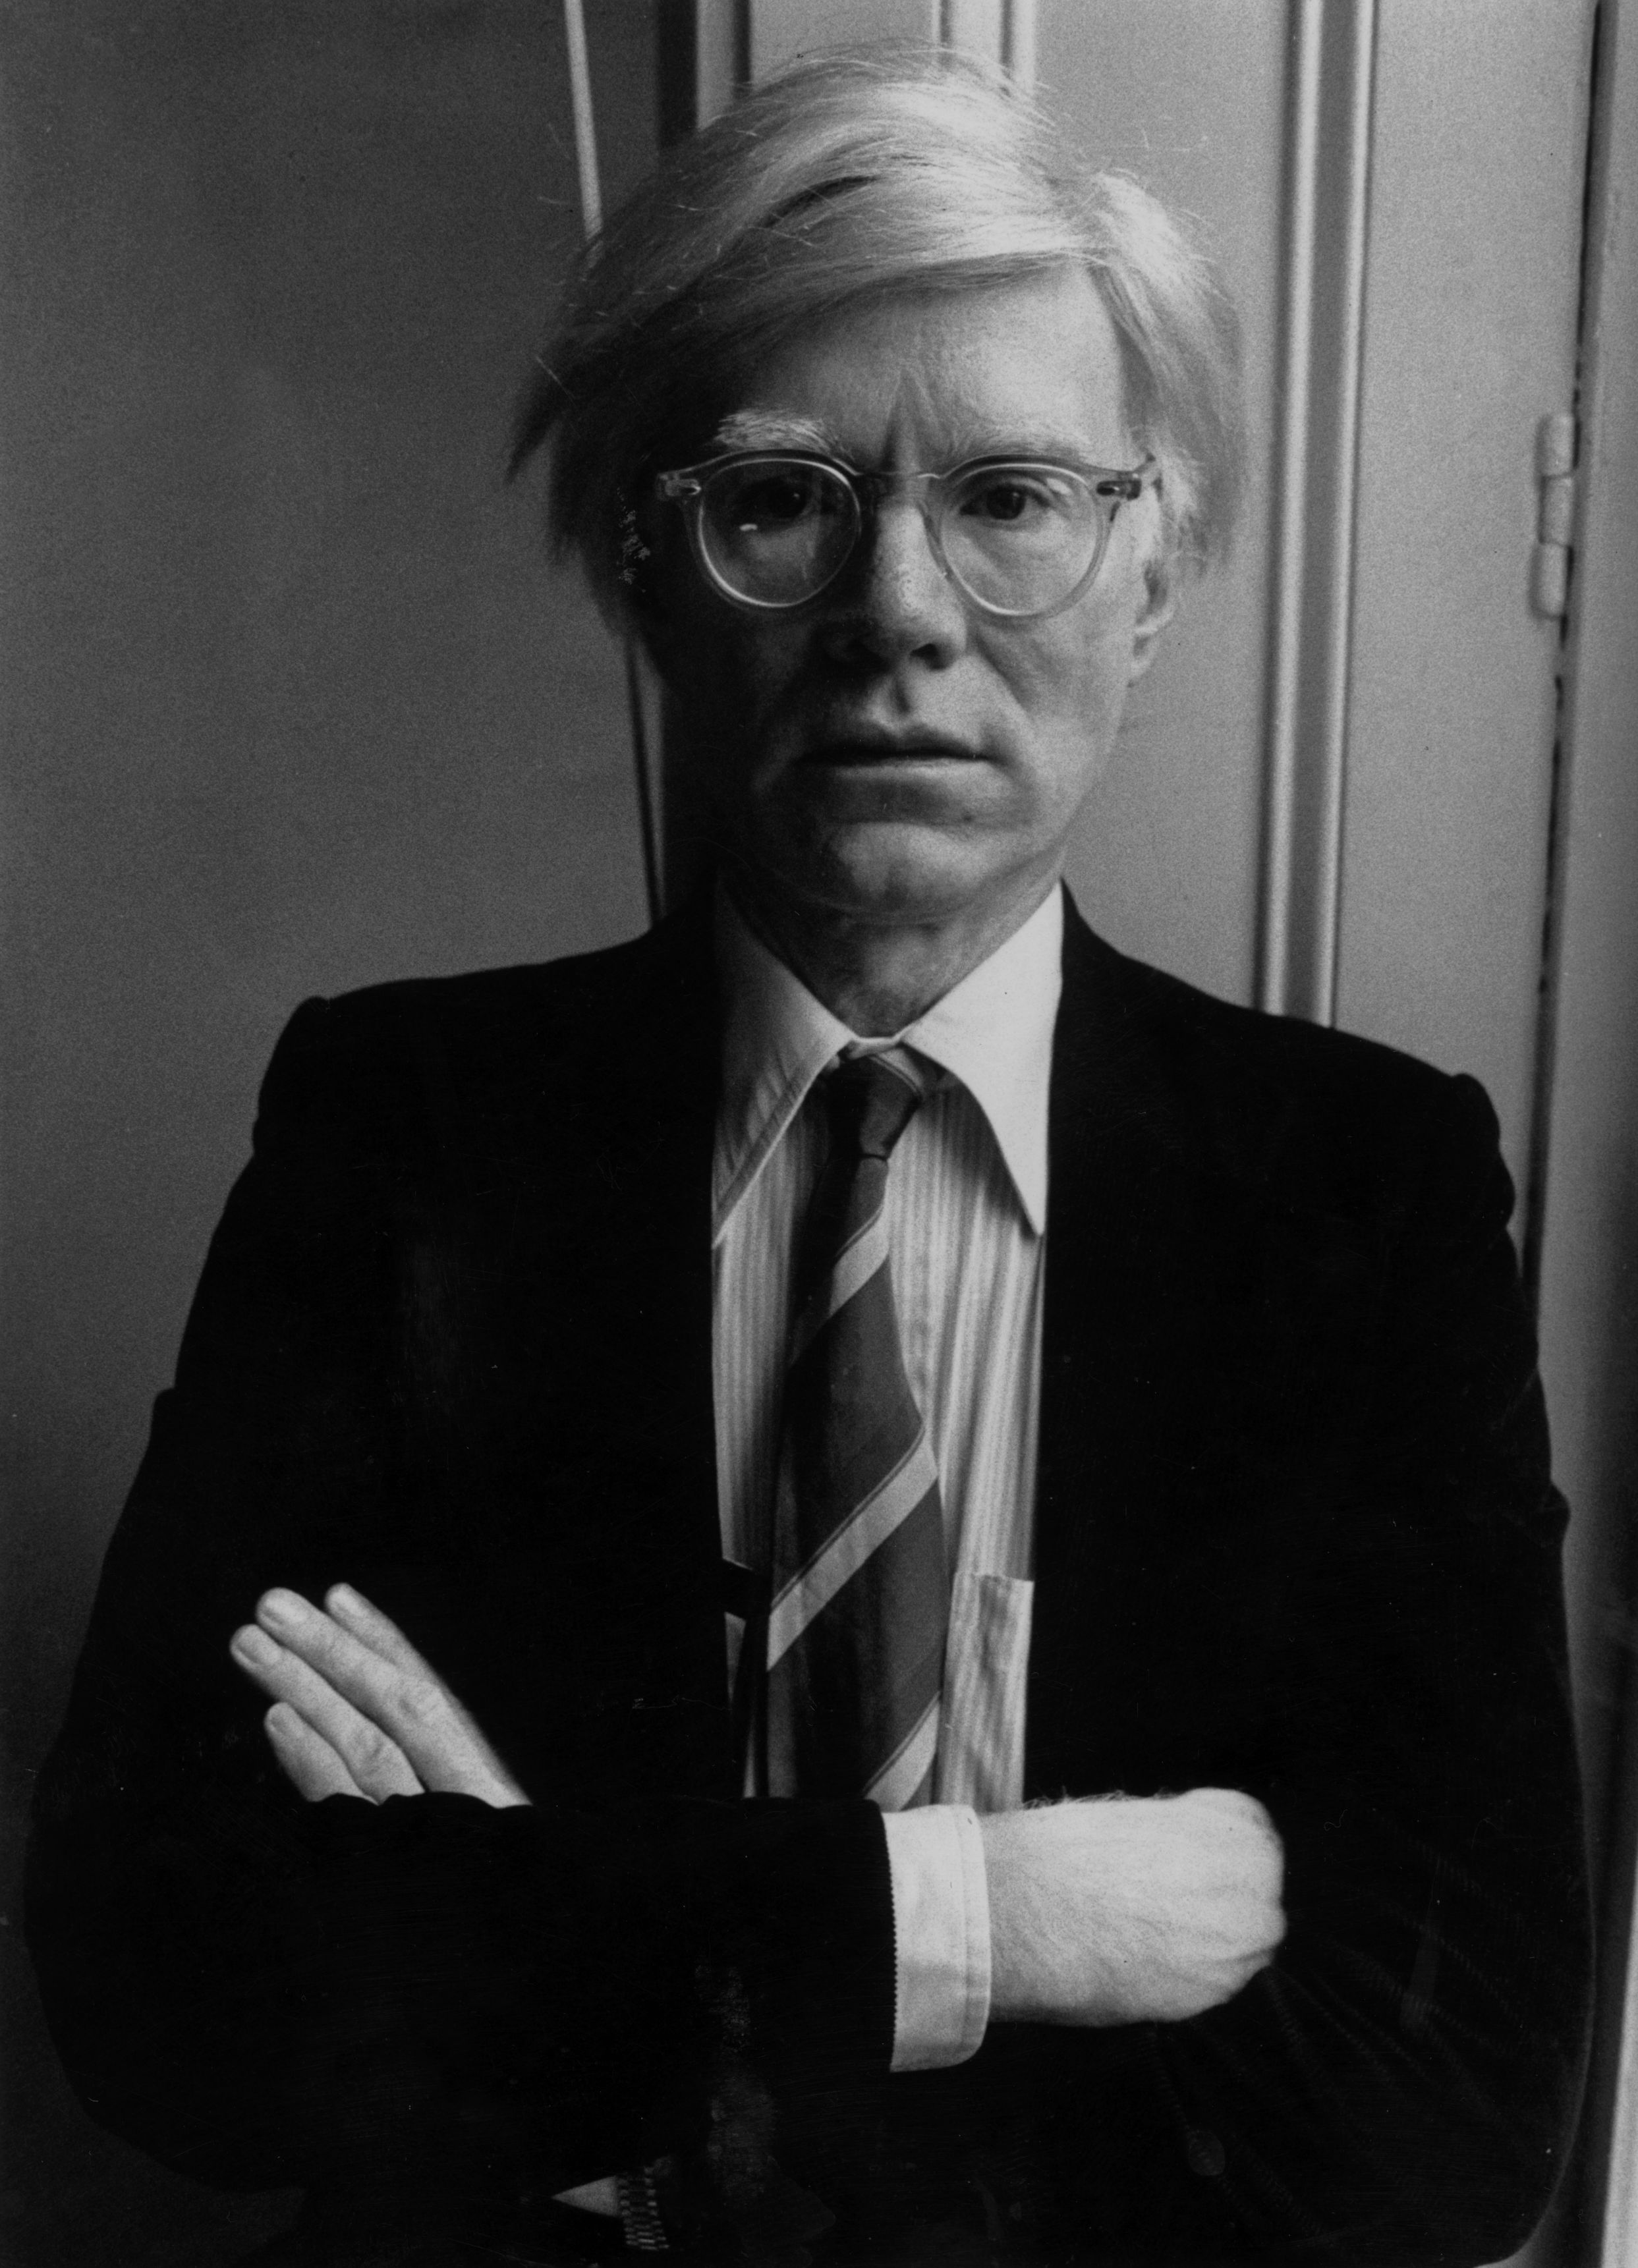 Andy Warhol - août 6, 1928 - février 22, 1987